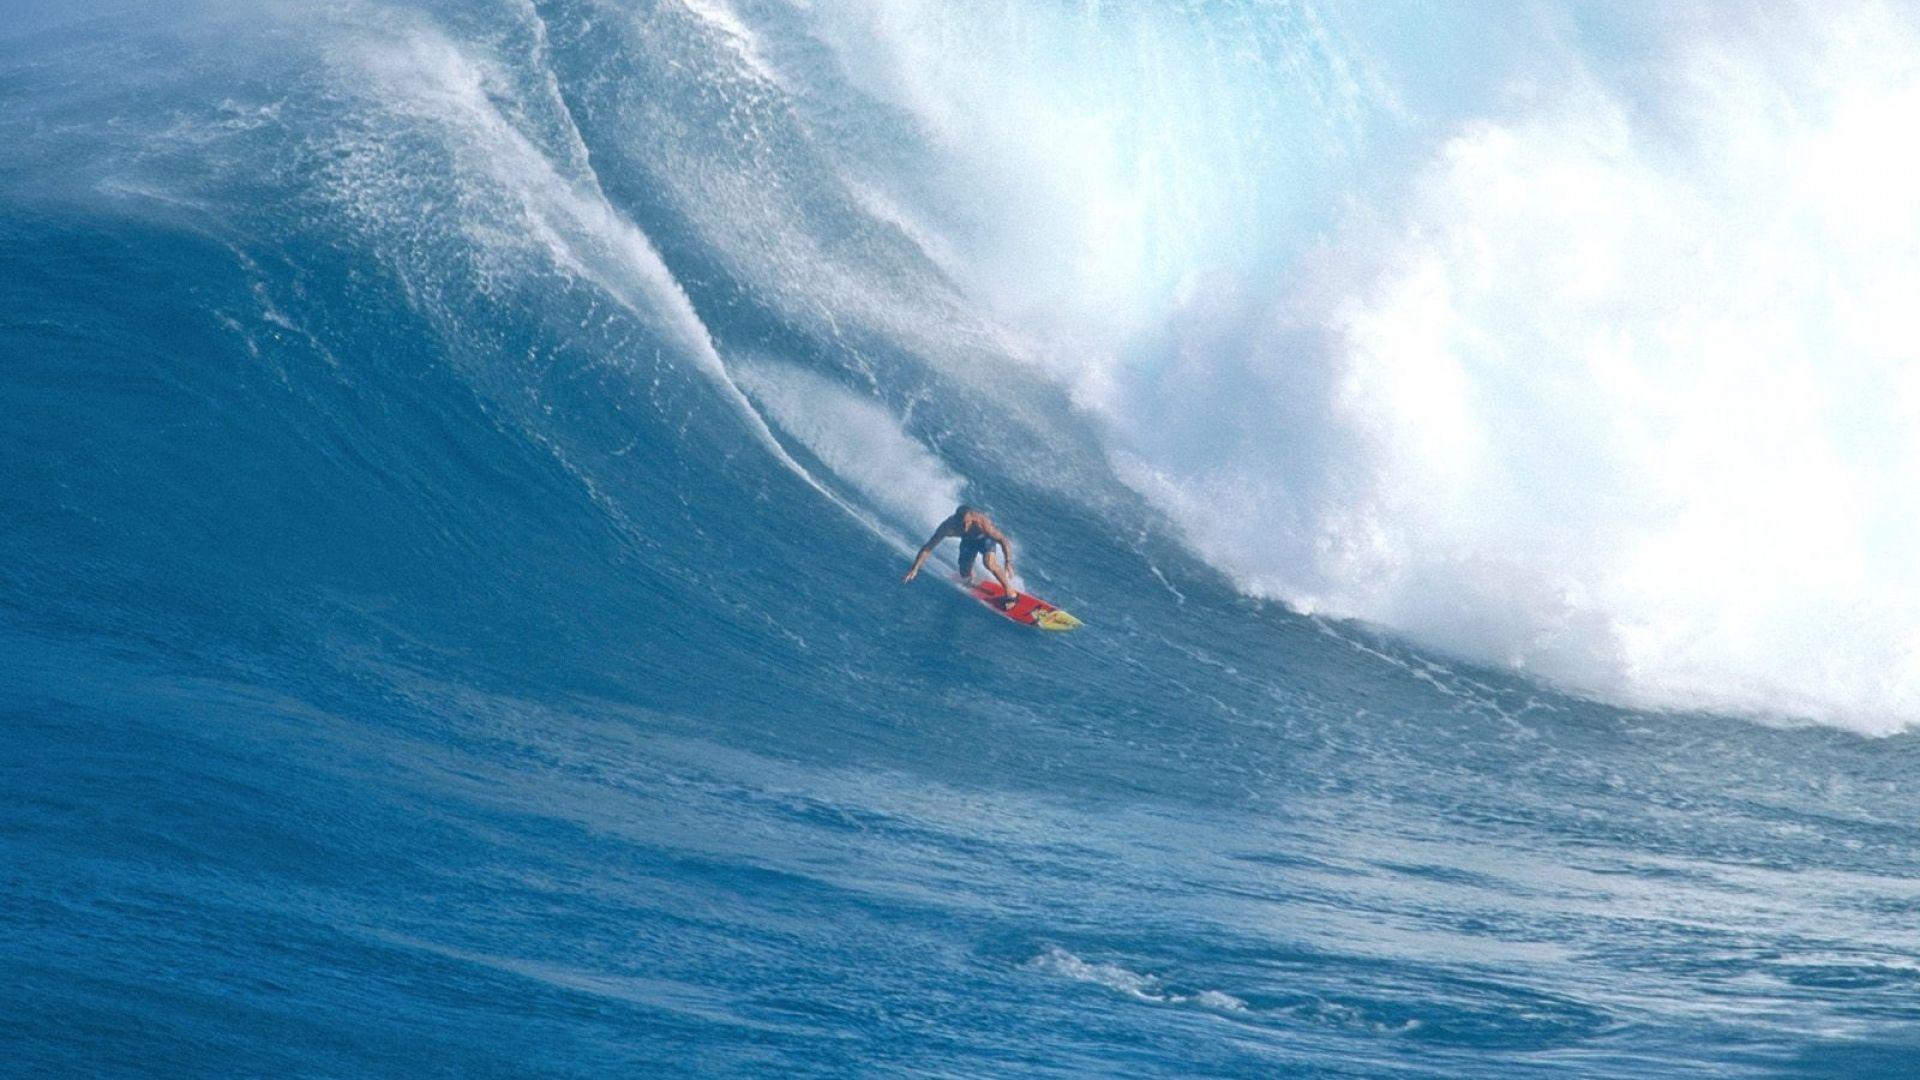 Full HD 1080p Surfing Wallpaper HD, Desktop Background 1920x1080. Surfing wallpaper, Big wave surfing, Surfing waves